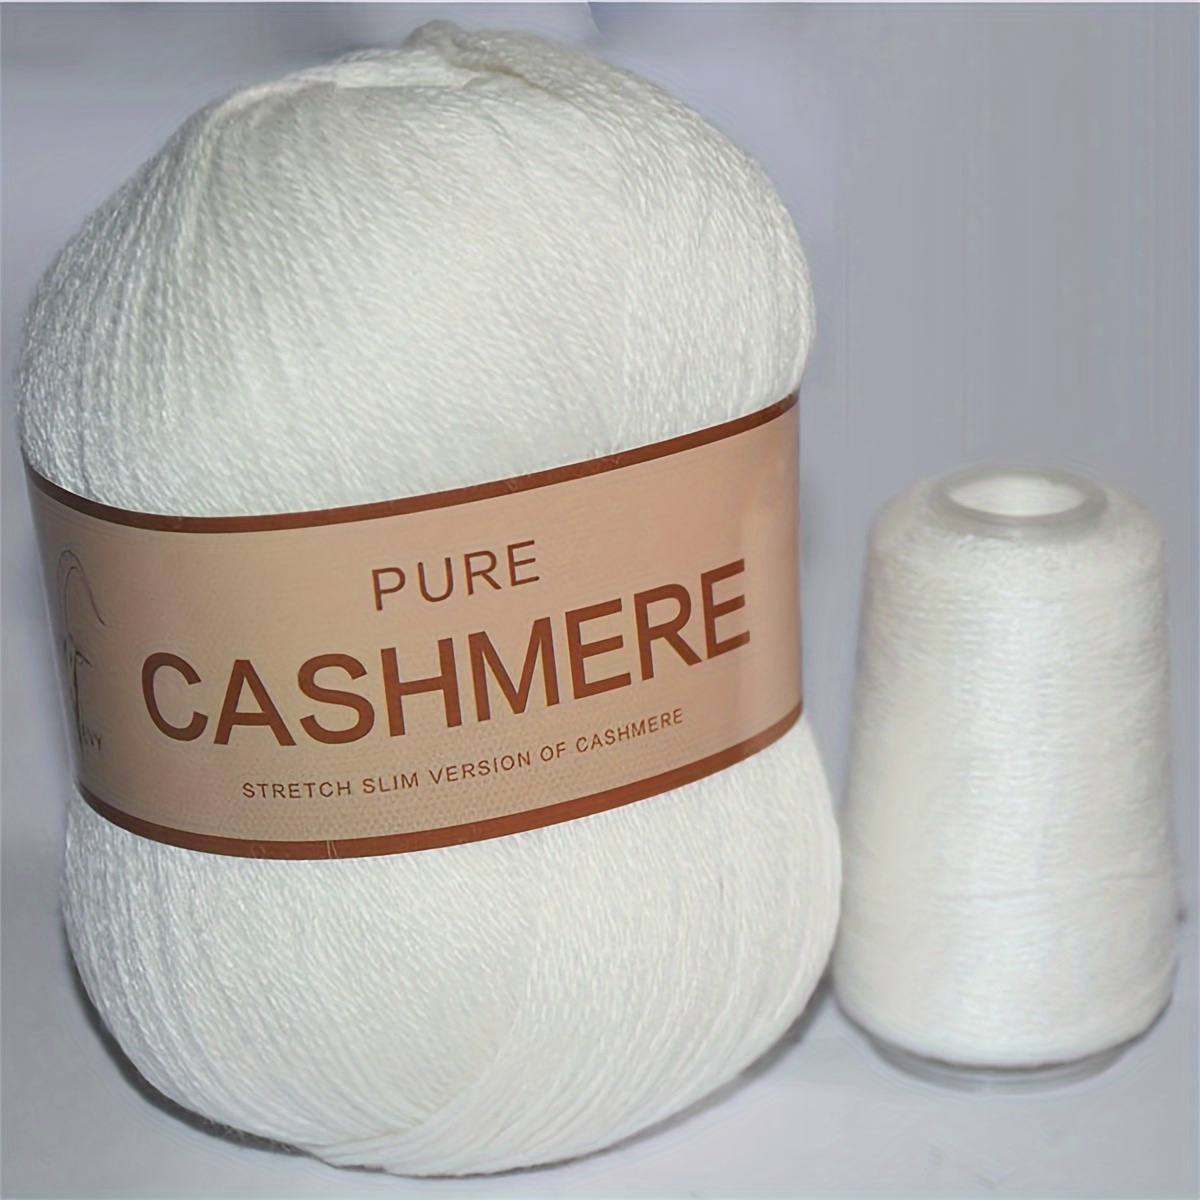  100% Cashmere Yarn, Mongolian Pure Cashmere Yarn 100 g -  Luxuriously Soft Cashmere Yarn for Knitting Crocheting Craft Projects  (Cream White)